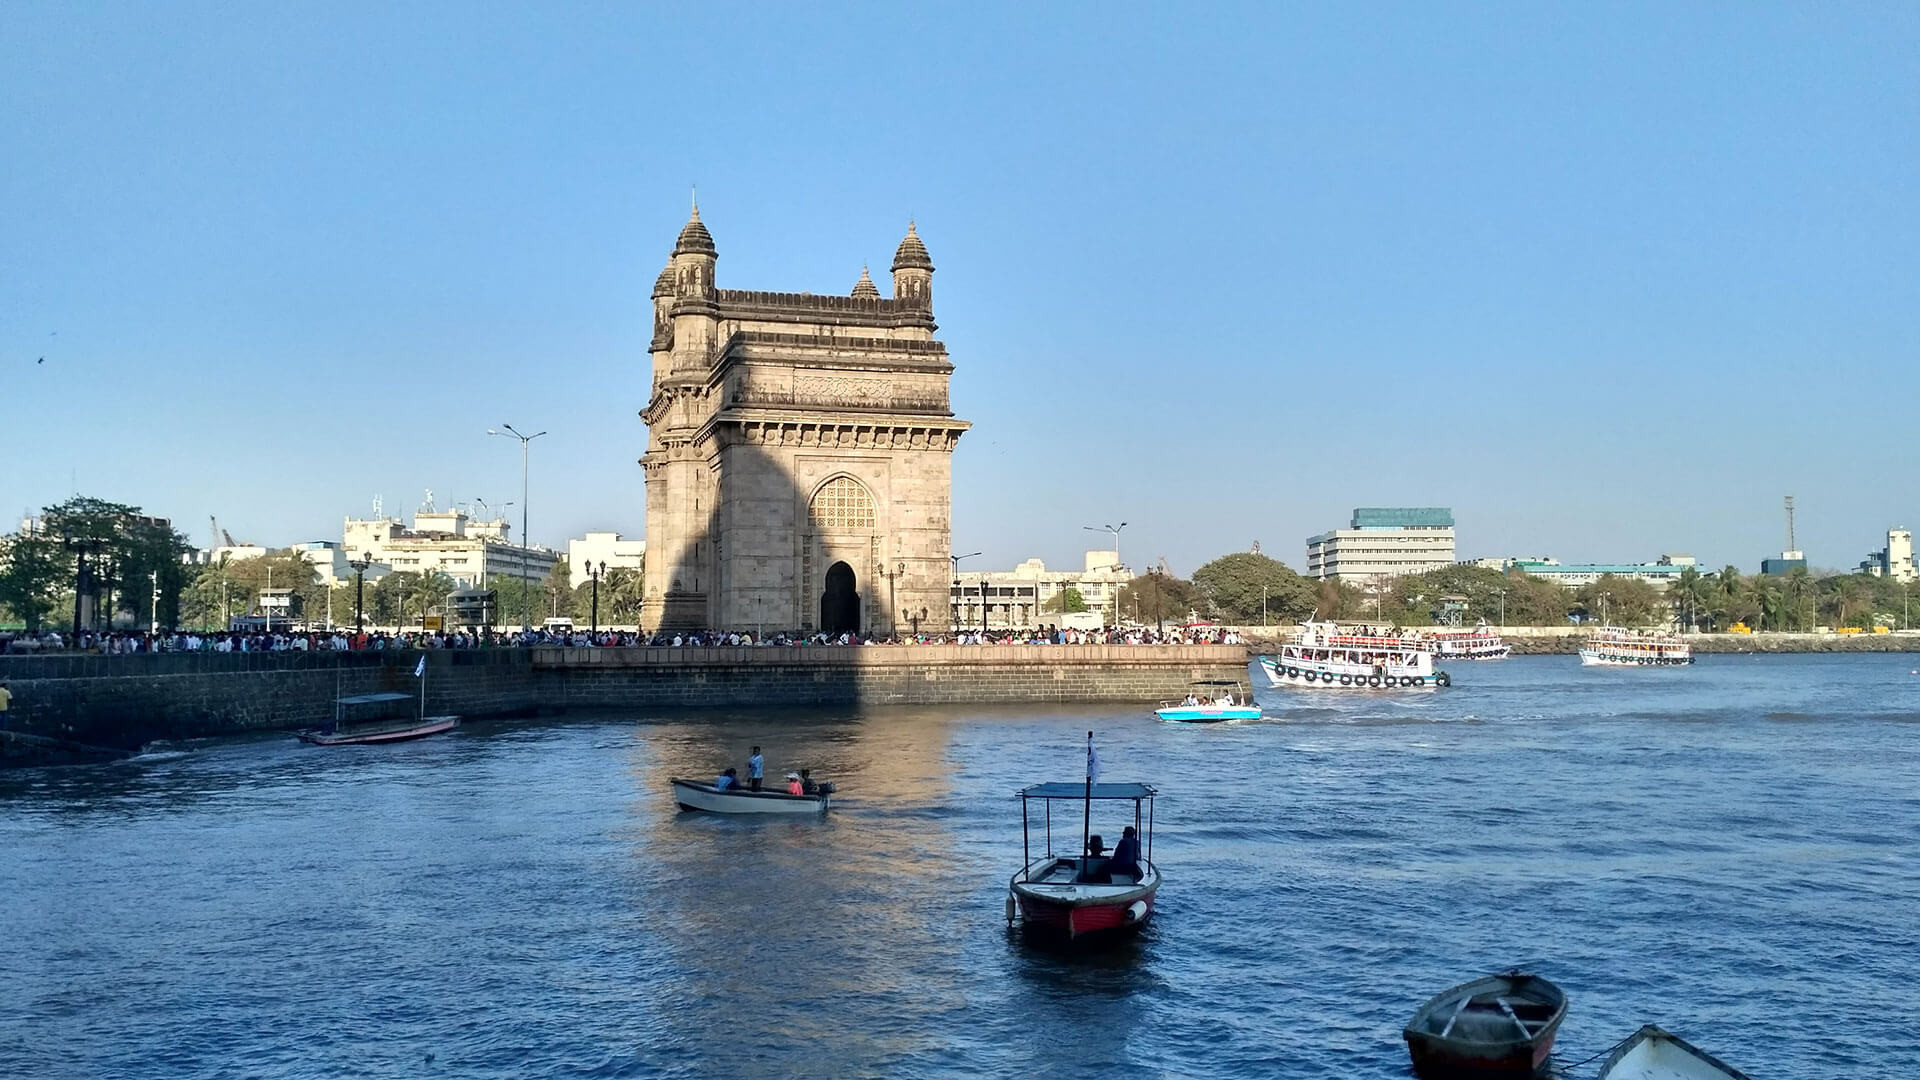 Gateway Of India Mumbai History Architecture Bulit By Location